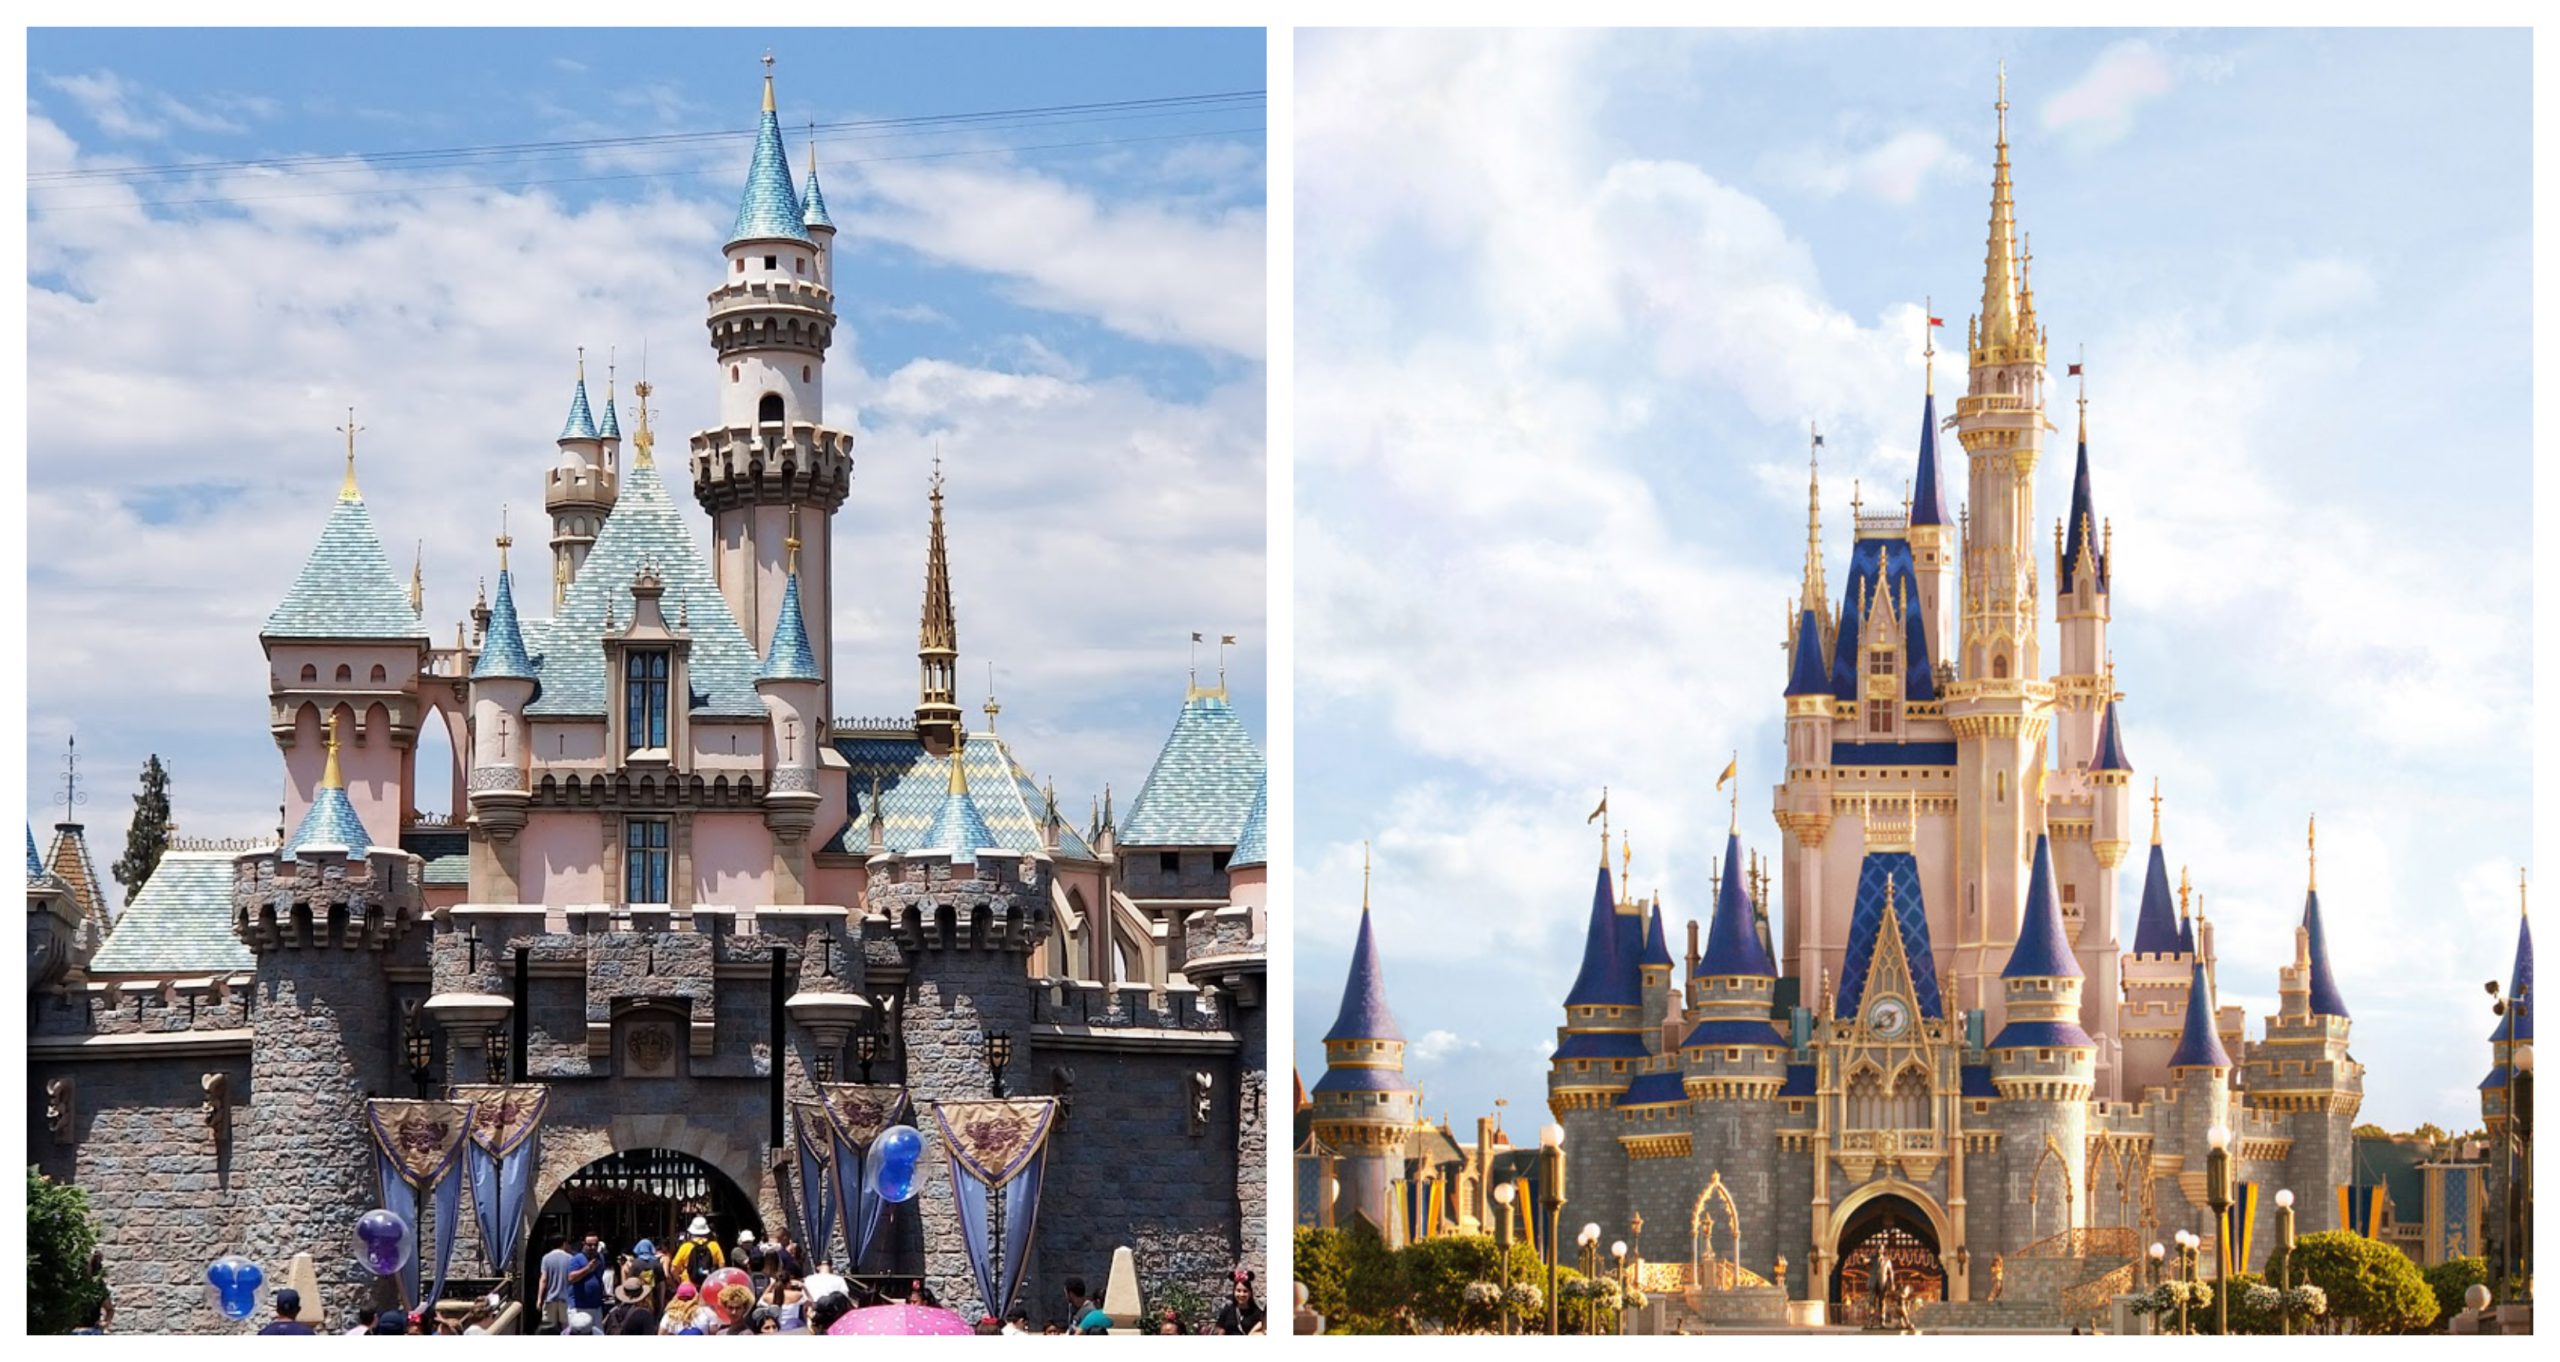 Disney releases update on Disney Theme Park Openings